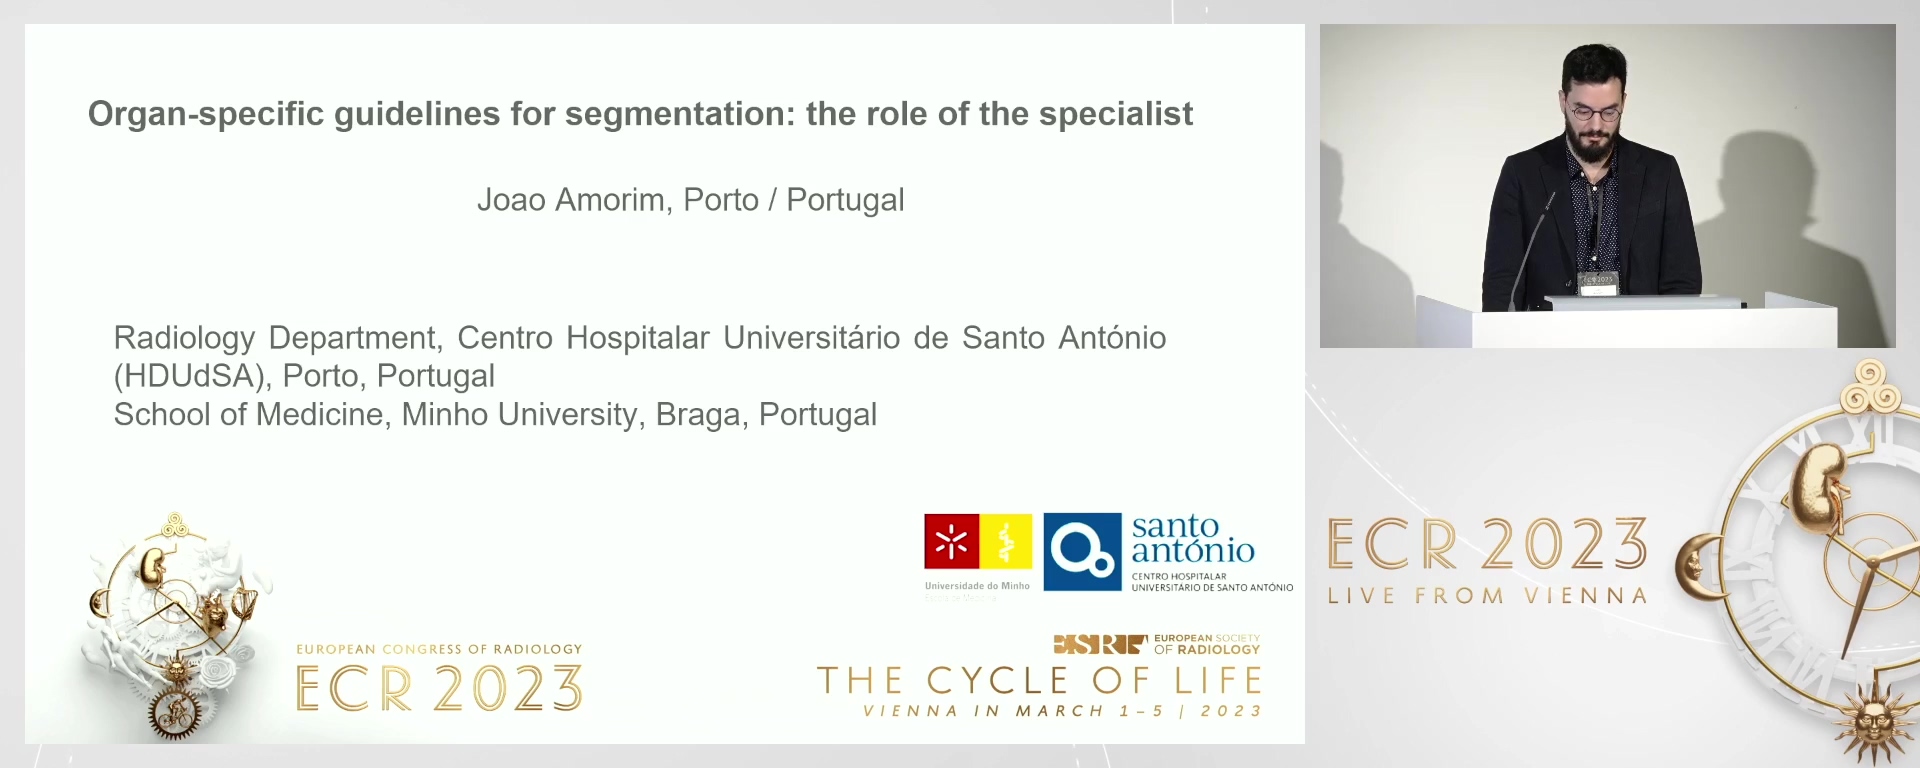 Organ-specific guidelines for segmentation: the role of the specialist - Joao Amorim, Porto / PT